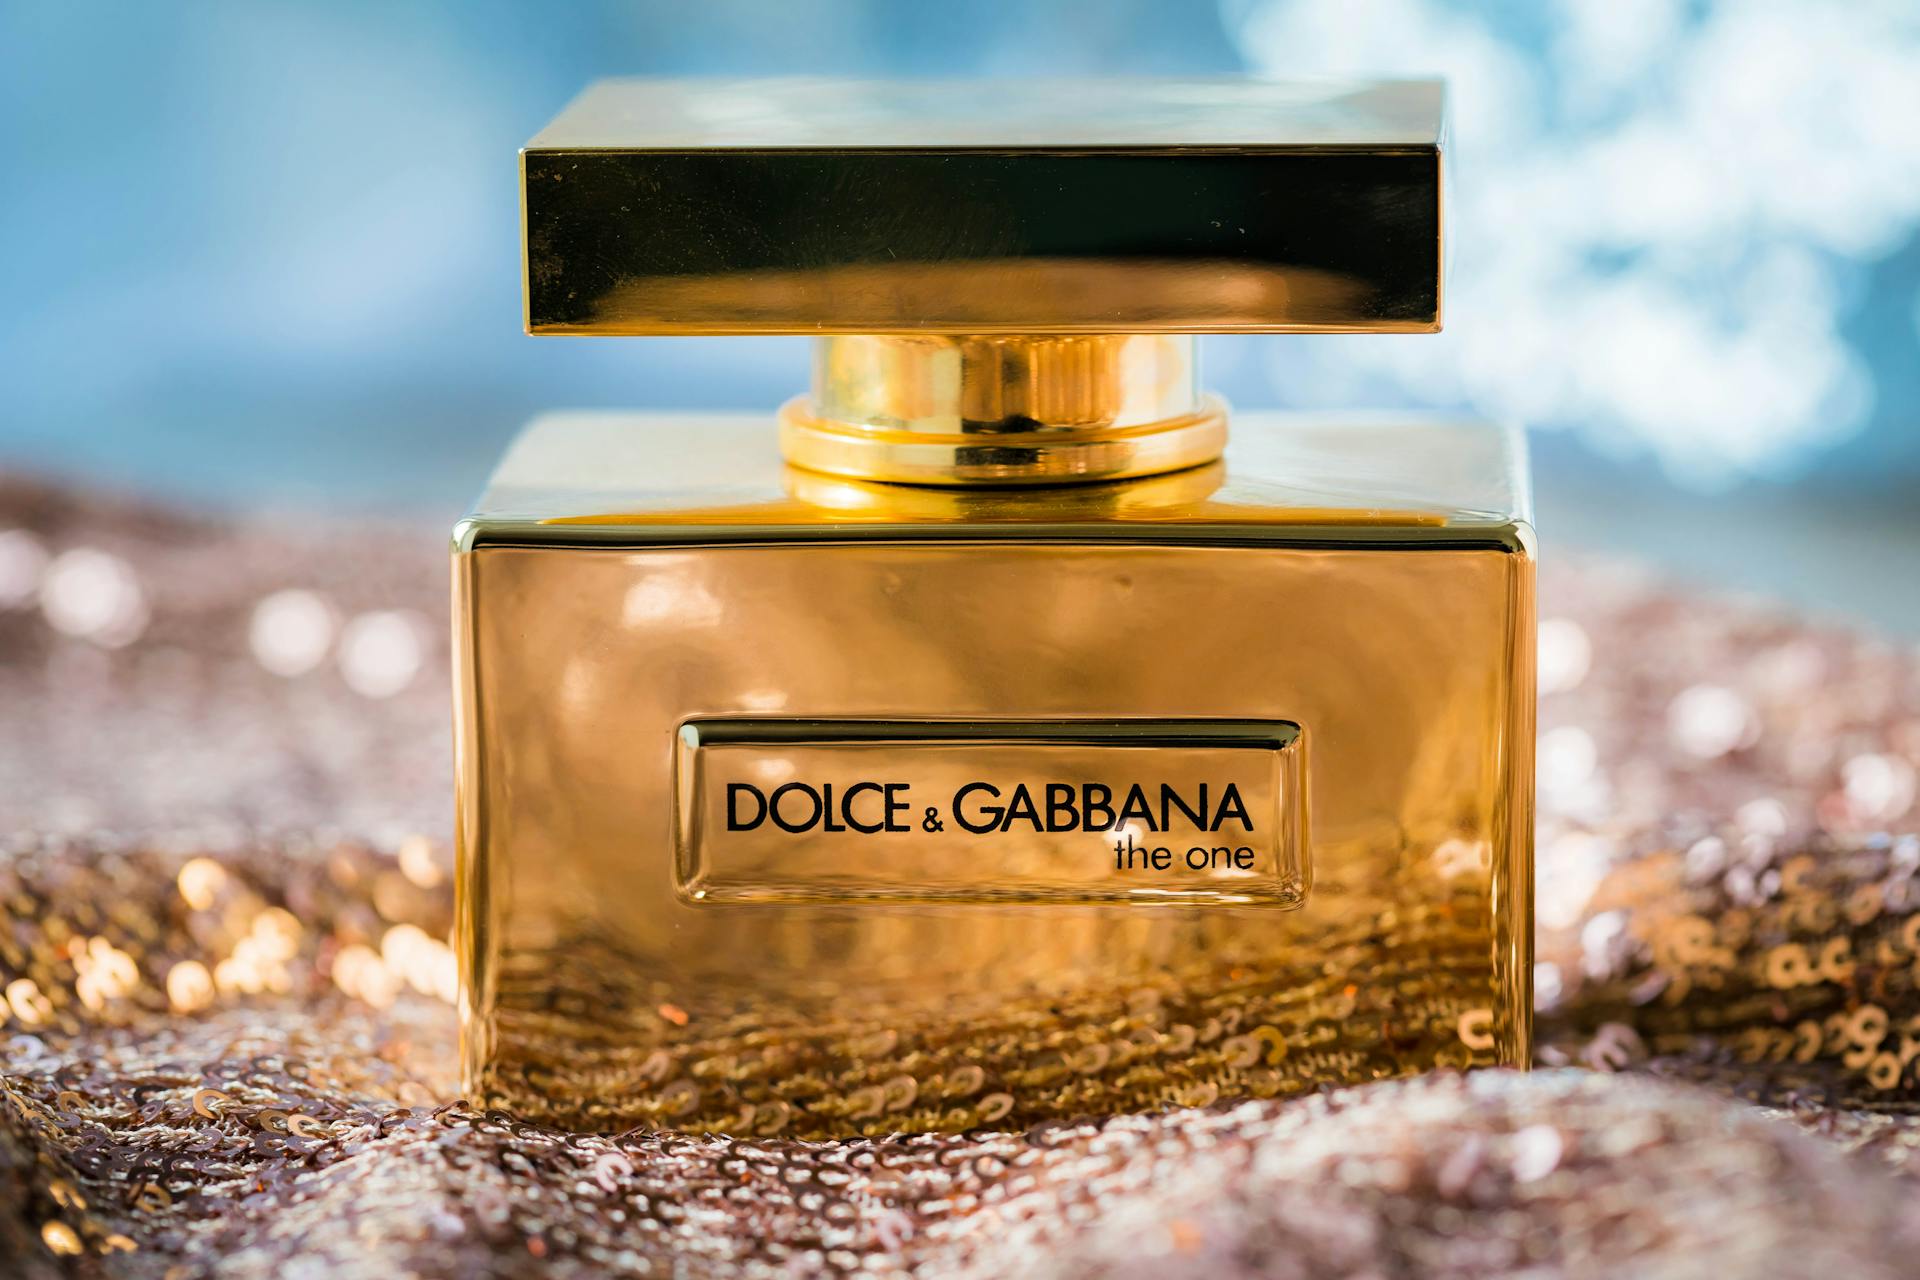 A Dolce & Gabbana perfume bottle | Source: Pexels